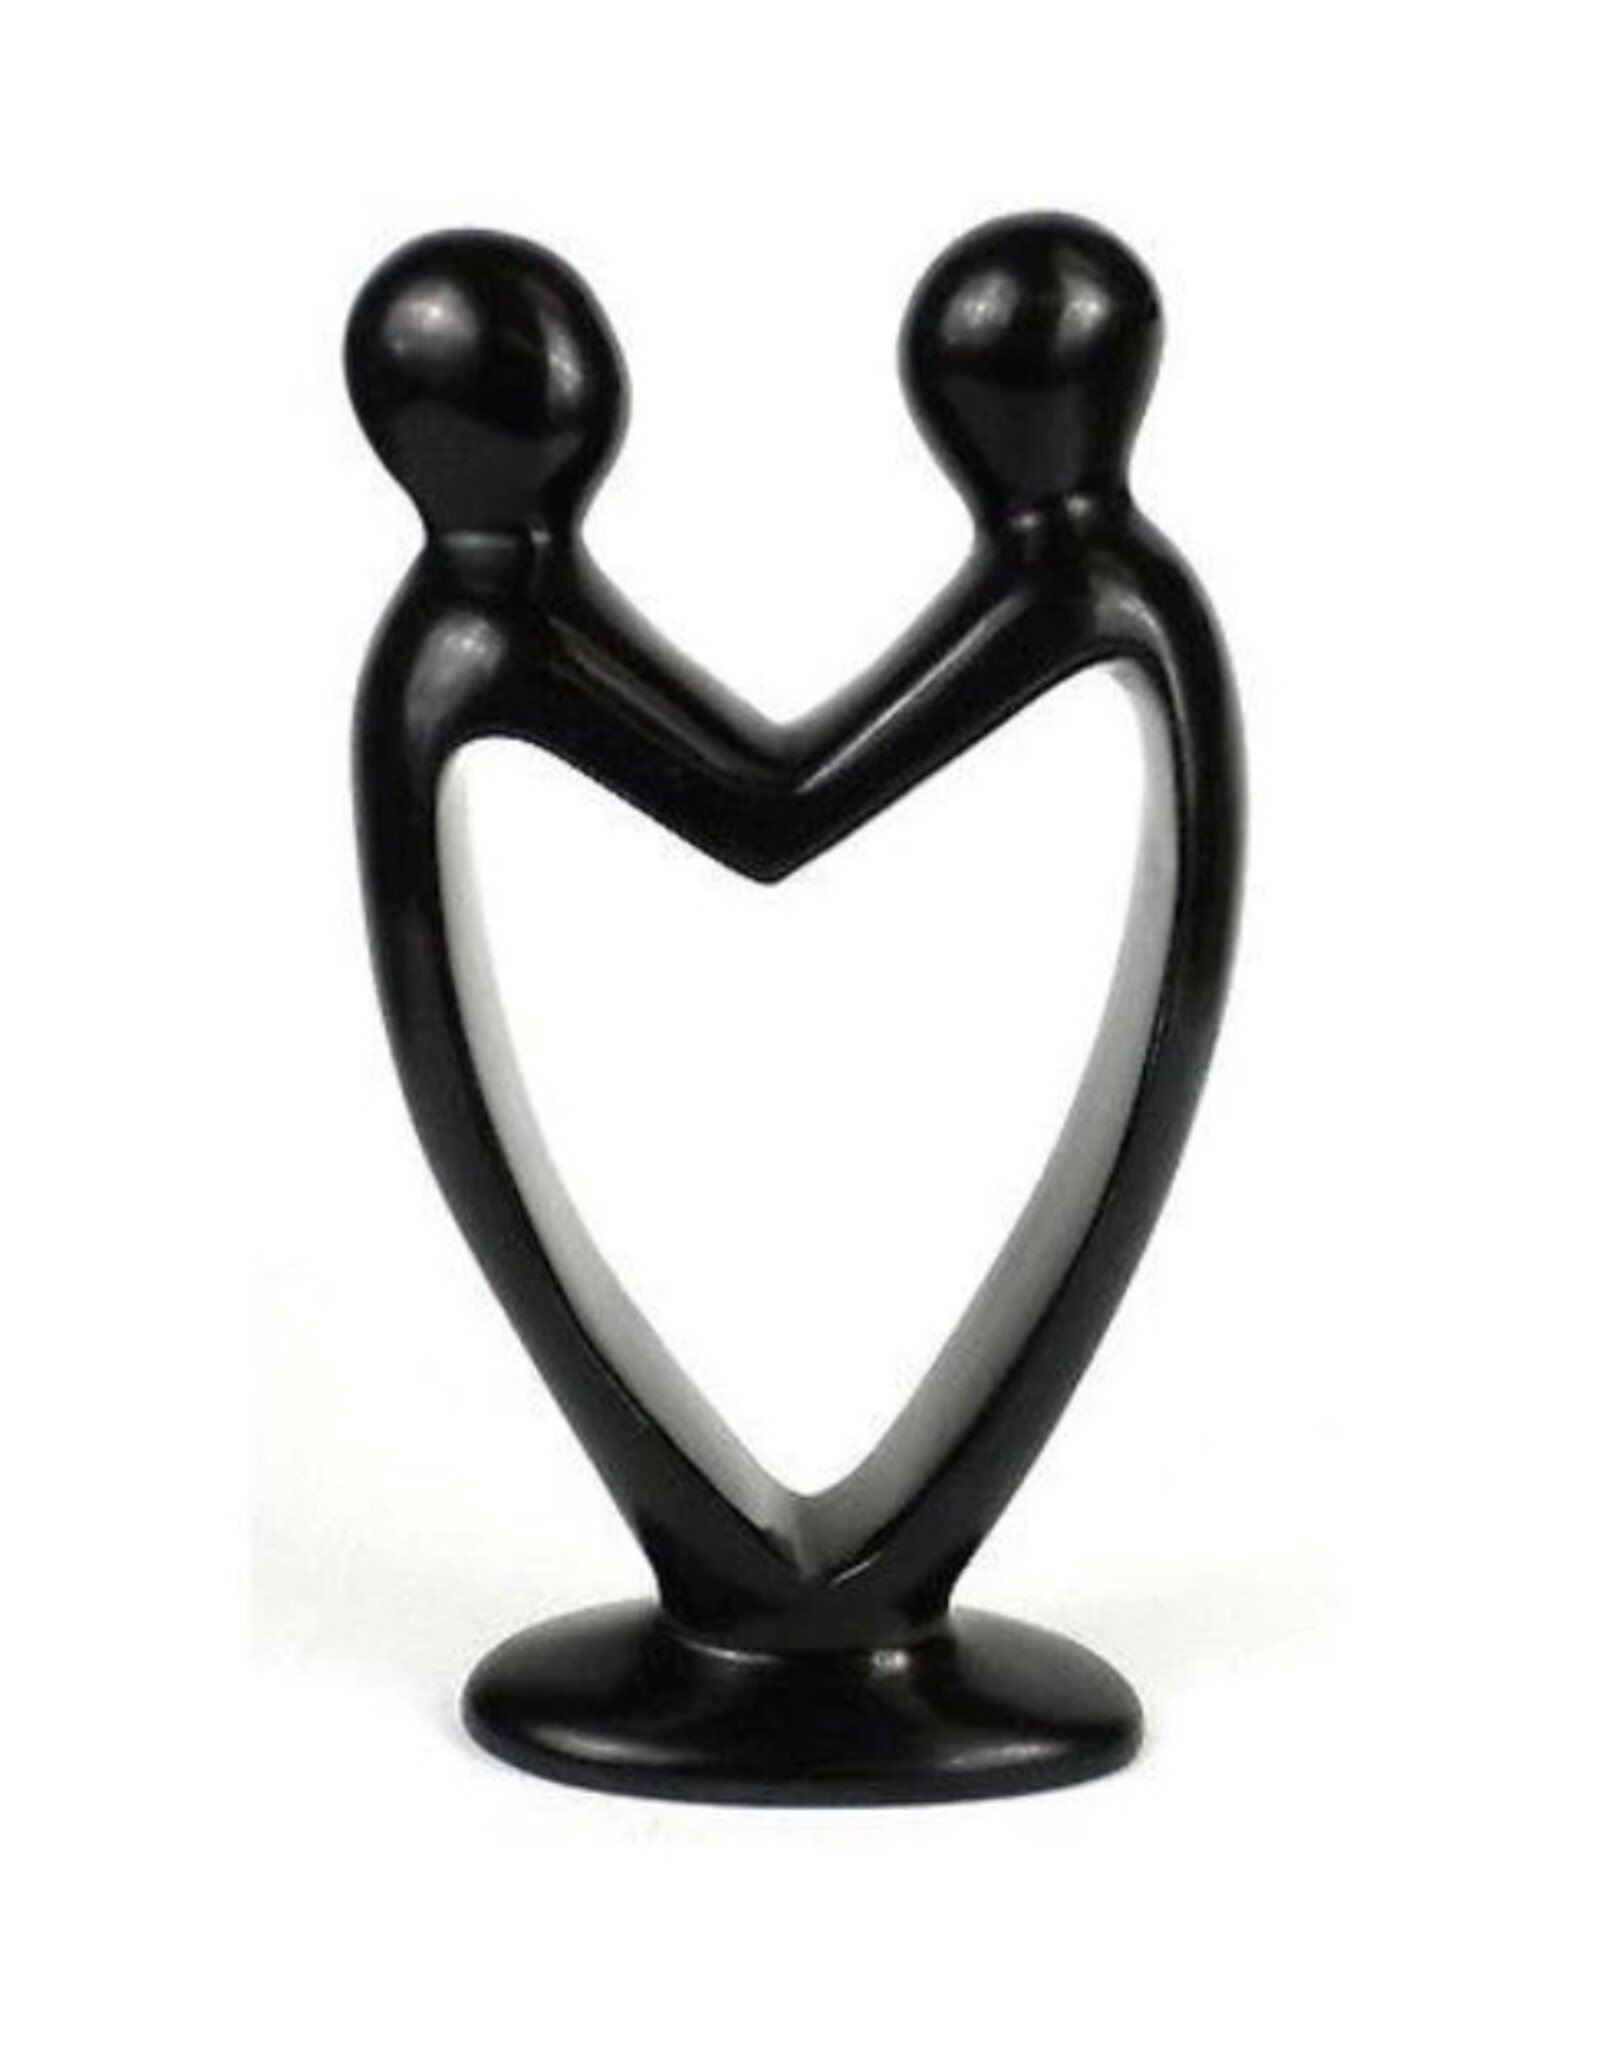 Lover's Heart Soapstone Sculpture in Black